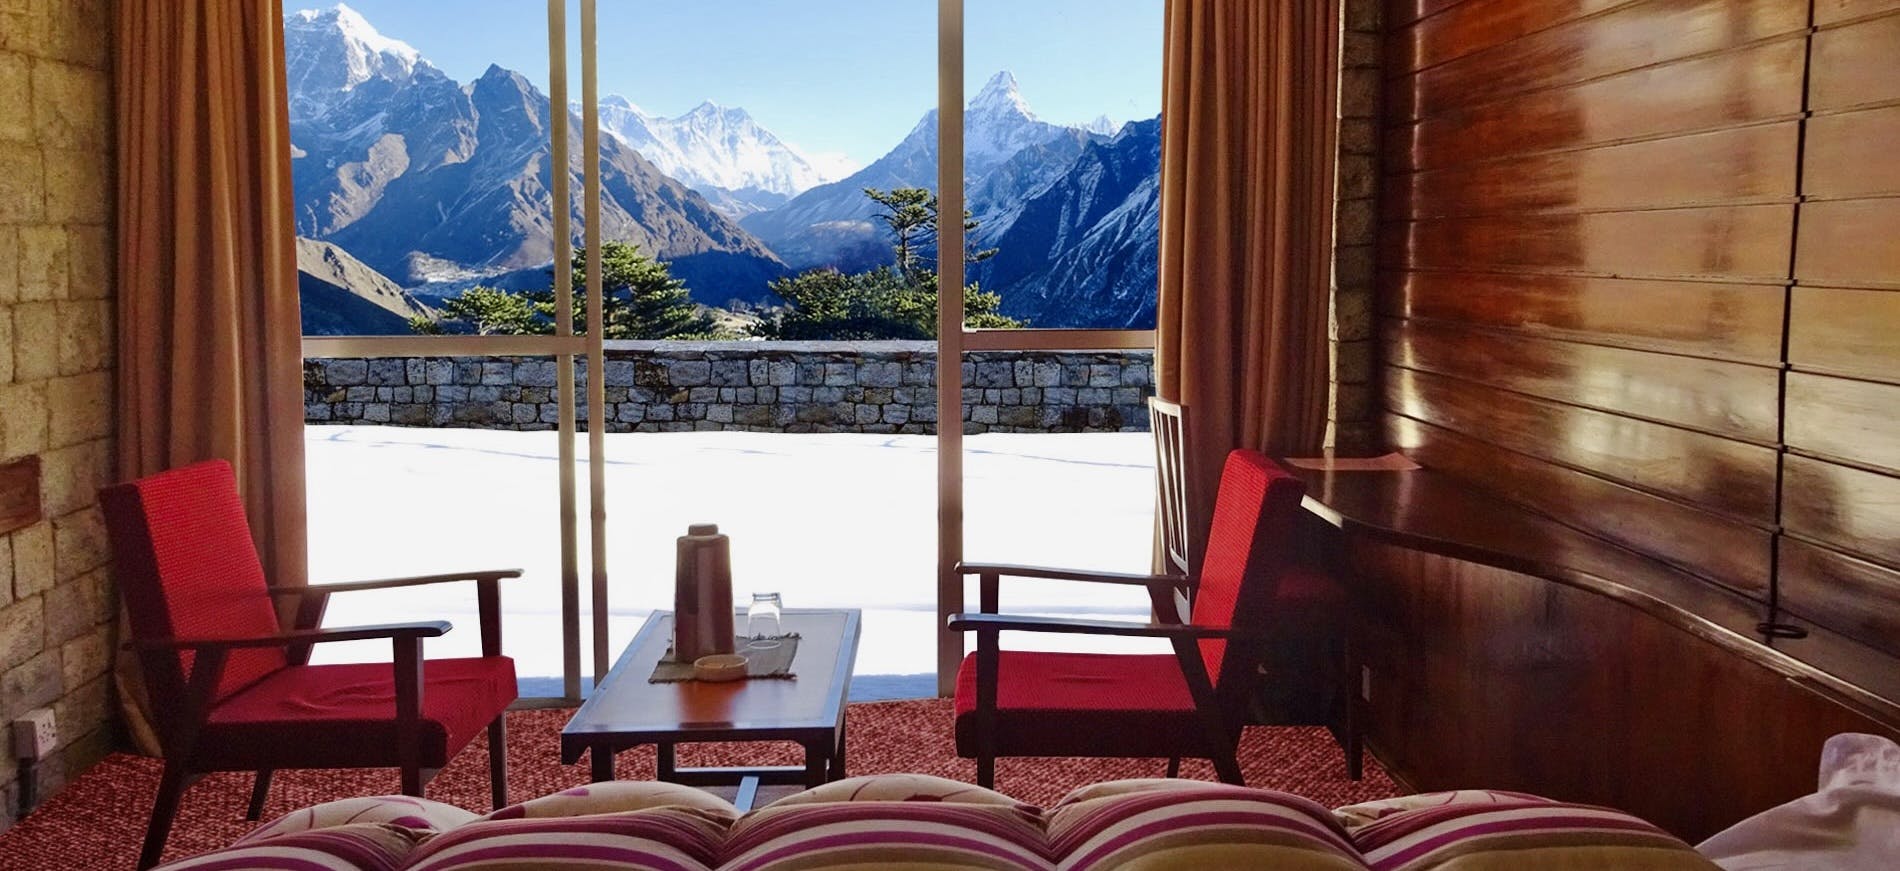 Best Time for Luxury Lodge Trek in Nepal